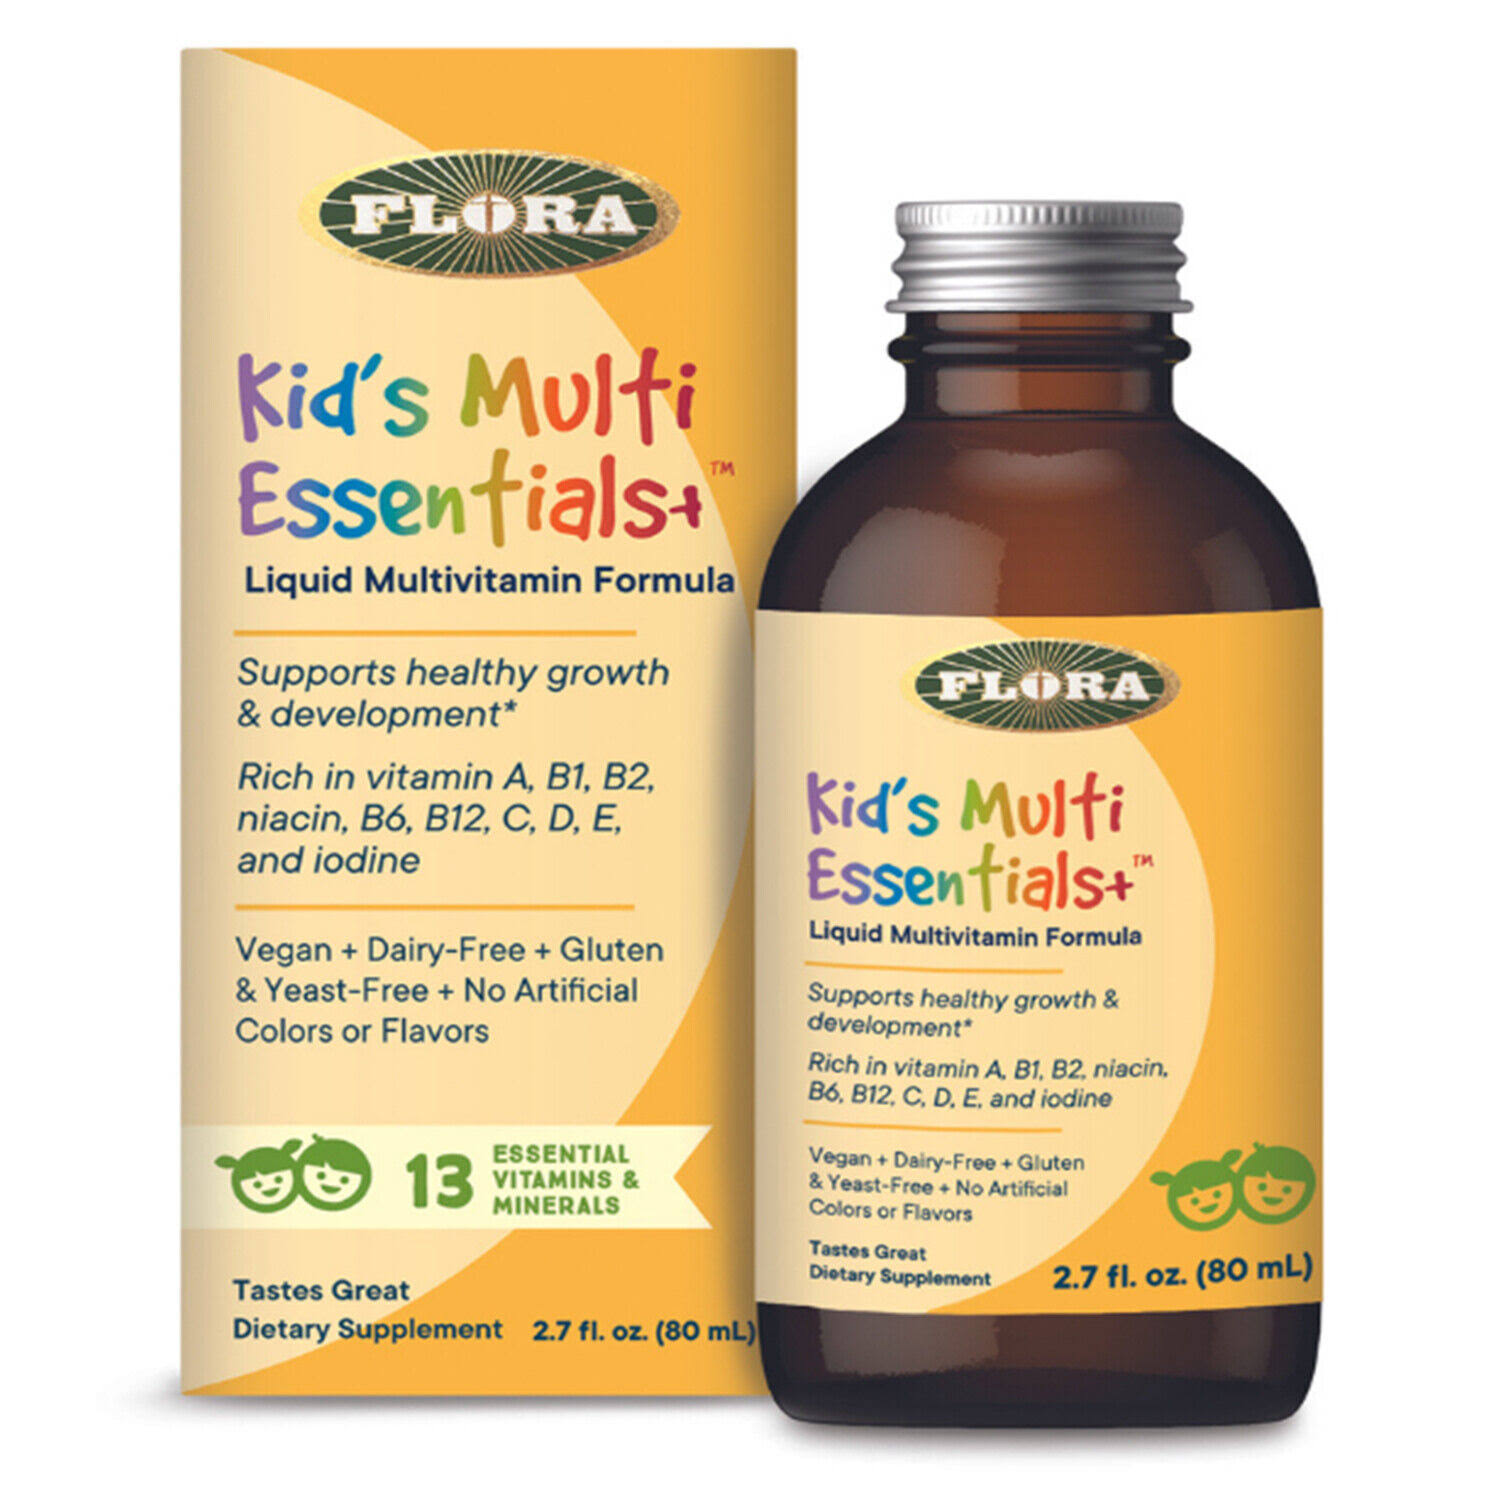 Flora Kid's Multi Essentials+ 2.7 fl oz | by NetNutri